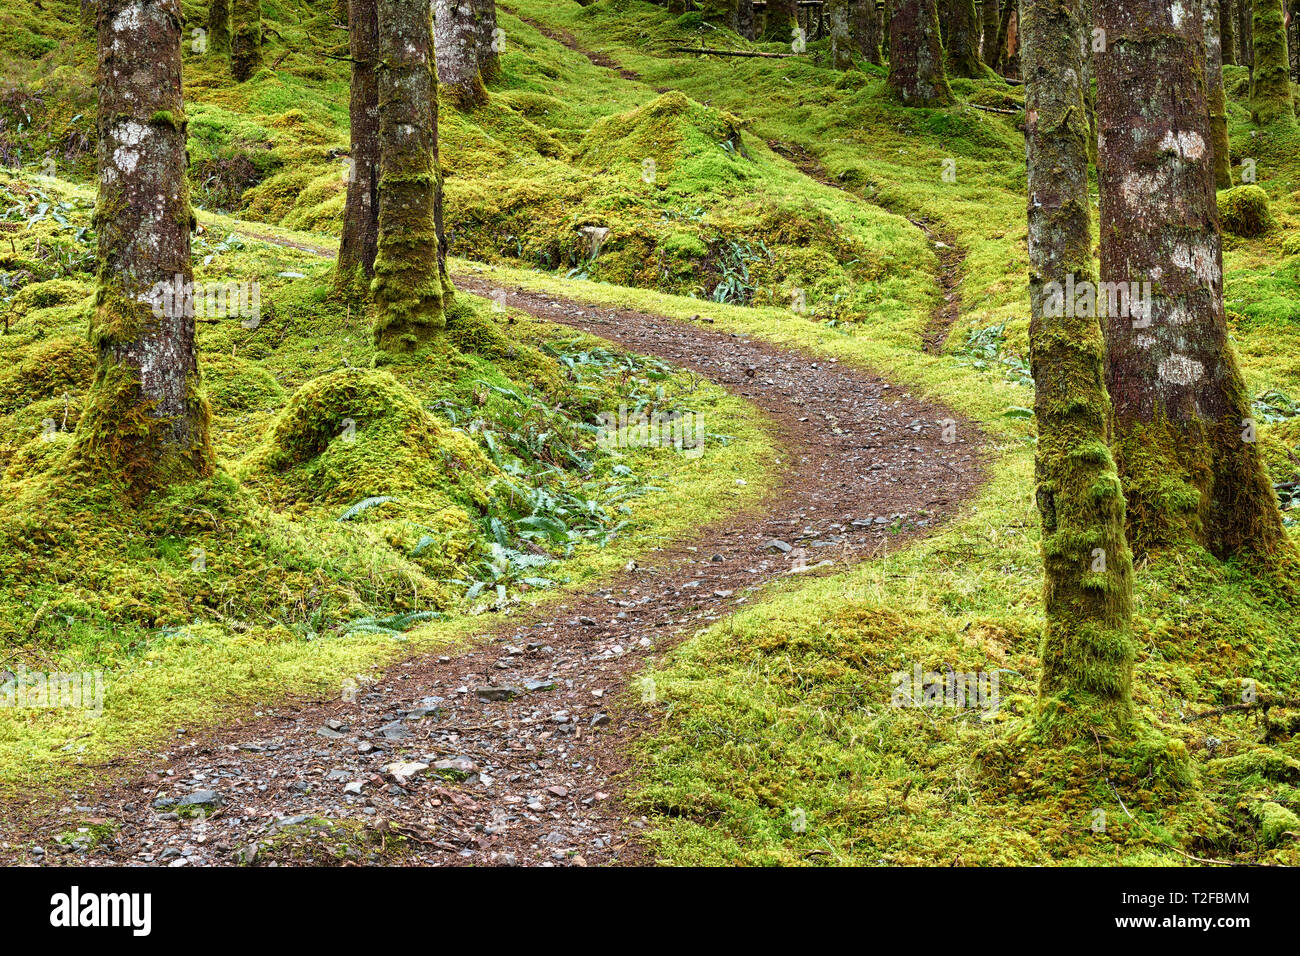 Forest walk near Invergarry, Lochaber, Highland, Scotland.  A winding path through moss and tree trunks. Stock Photo